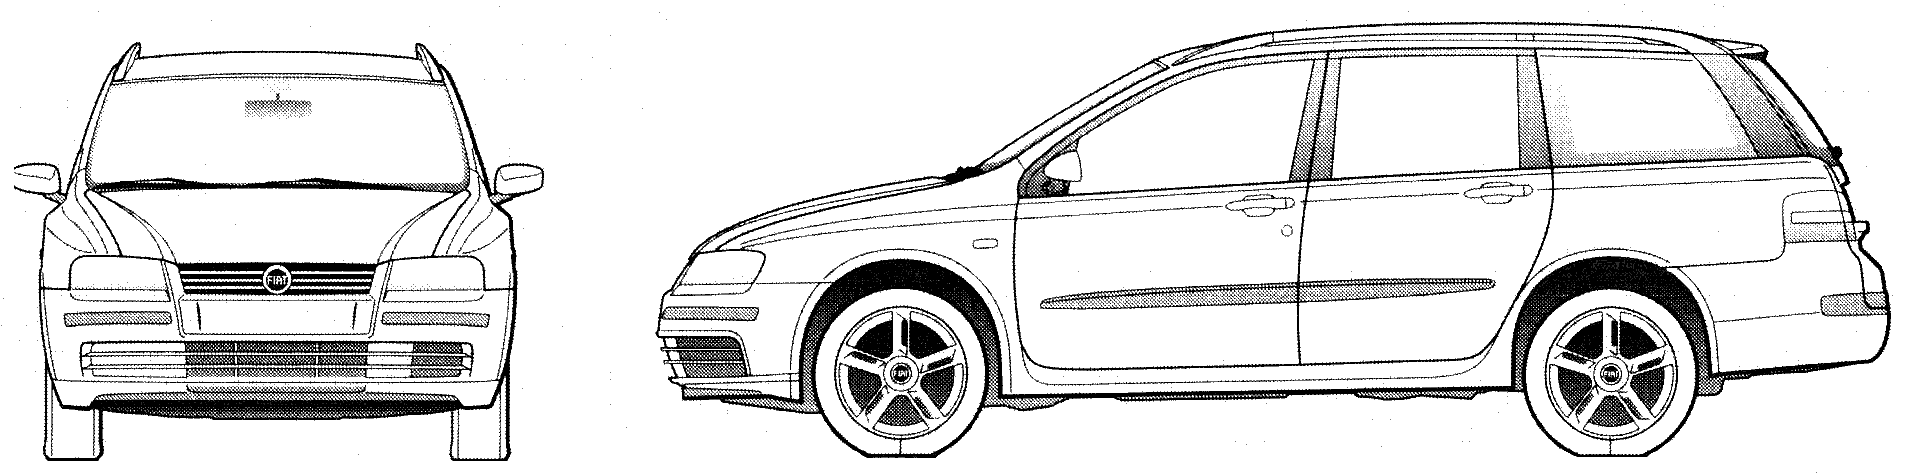 Car FIAT - Stilo (S-F)